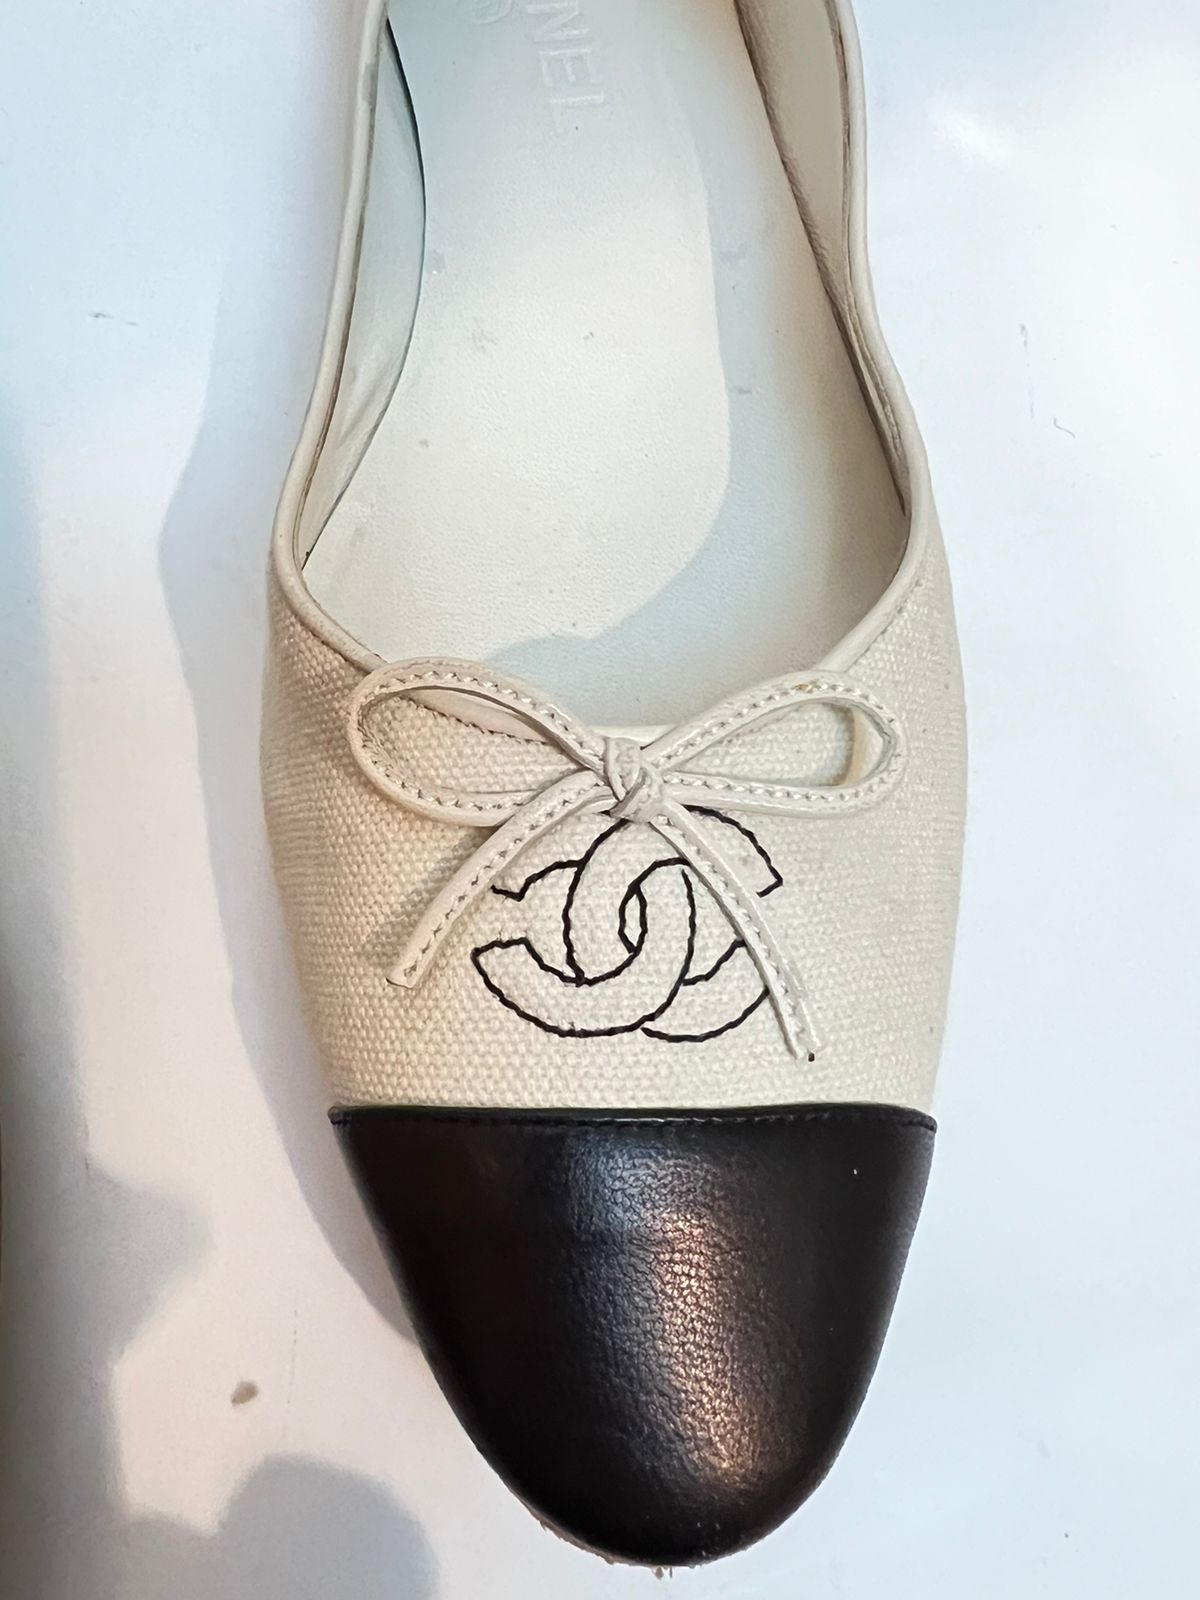 Chanel Ballerina Flats Ivory and Black Canvas CC Shoes EU 39.5 US 8.5